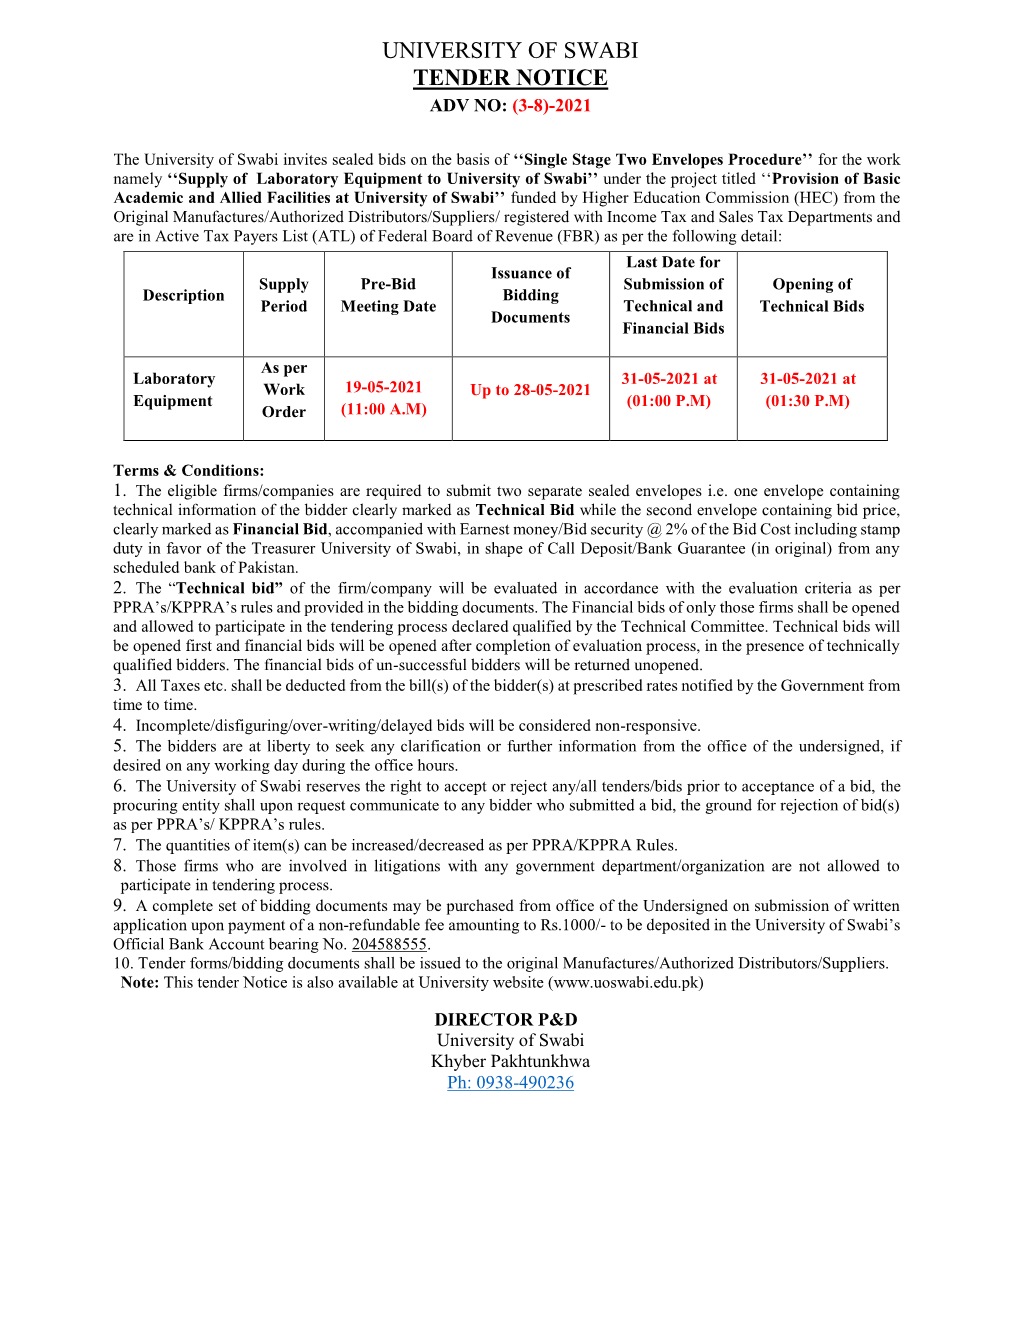 University of Swabi Tender Notice Adv No: (3-8)-2021